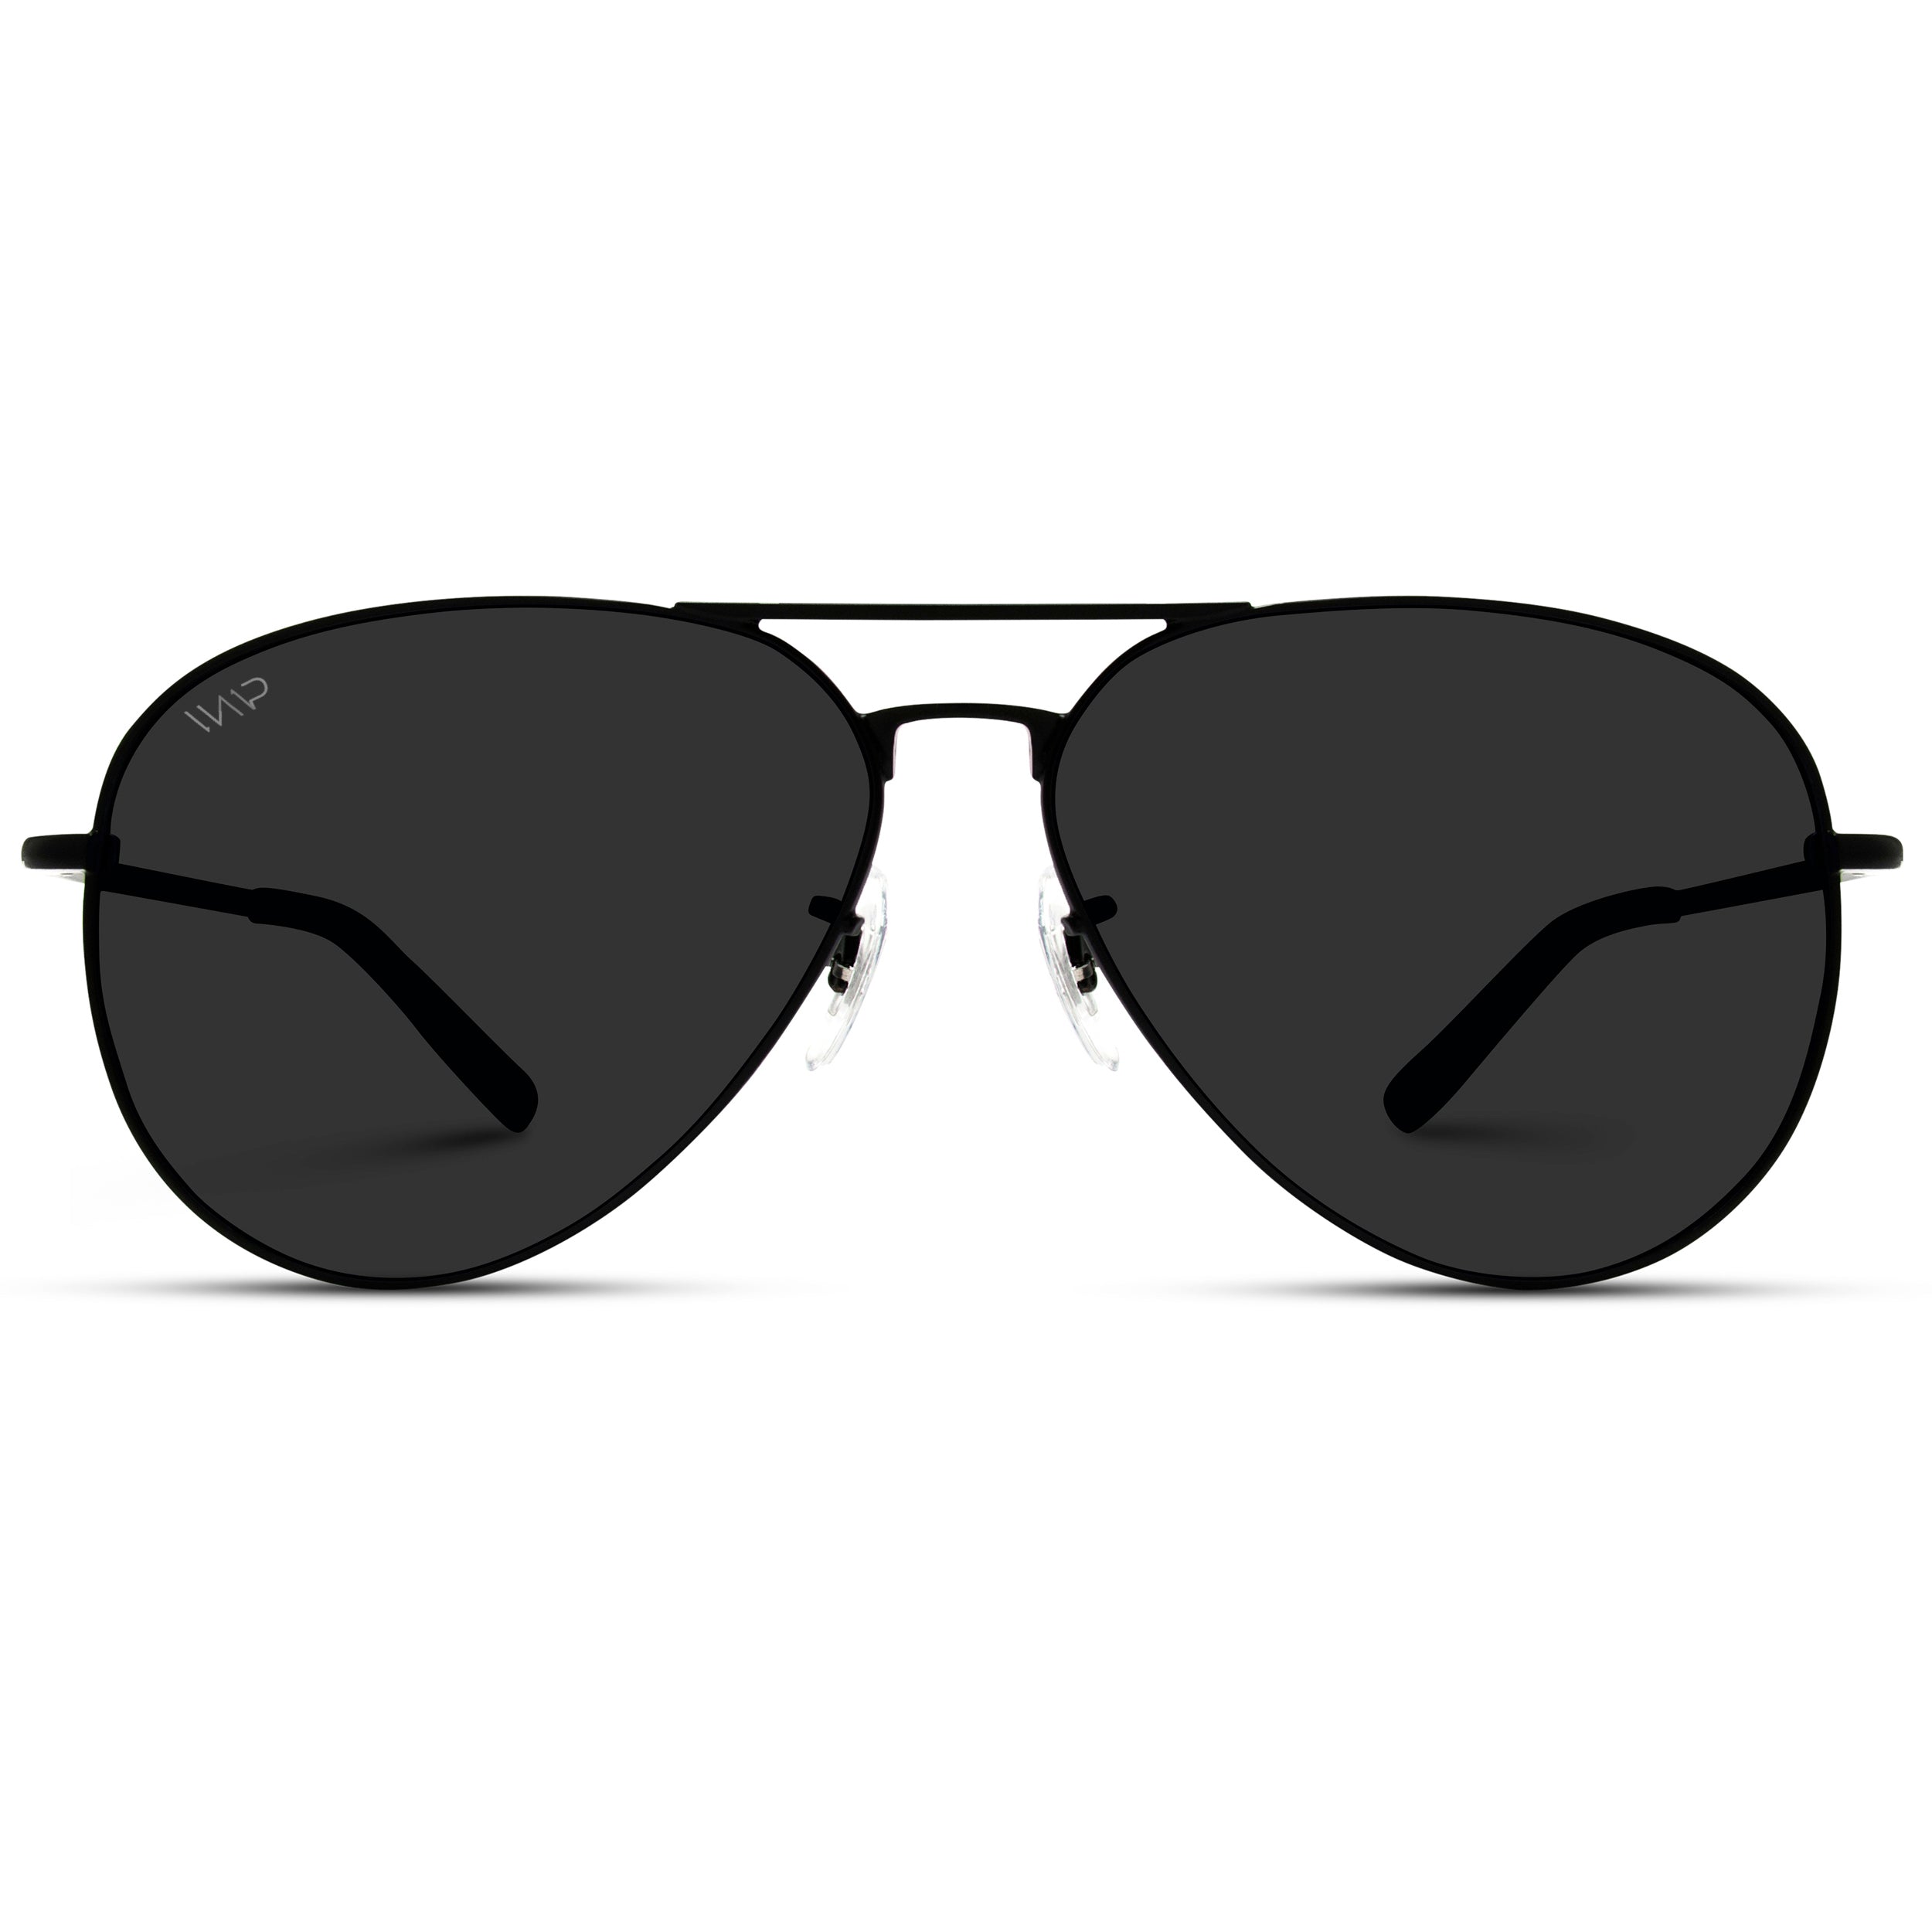 WearMe Pro - Classic Full Black Polarized Lens Metal Frame Men Aviator Style Sunglasses - image 1 of 6